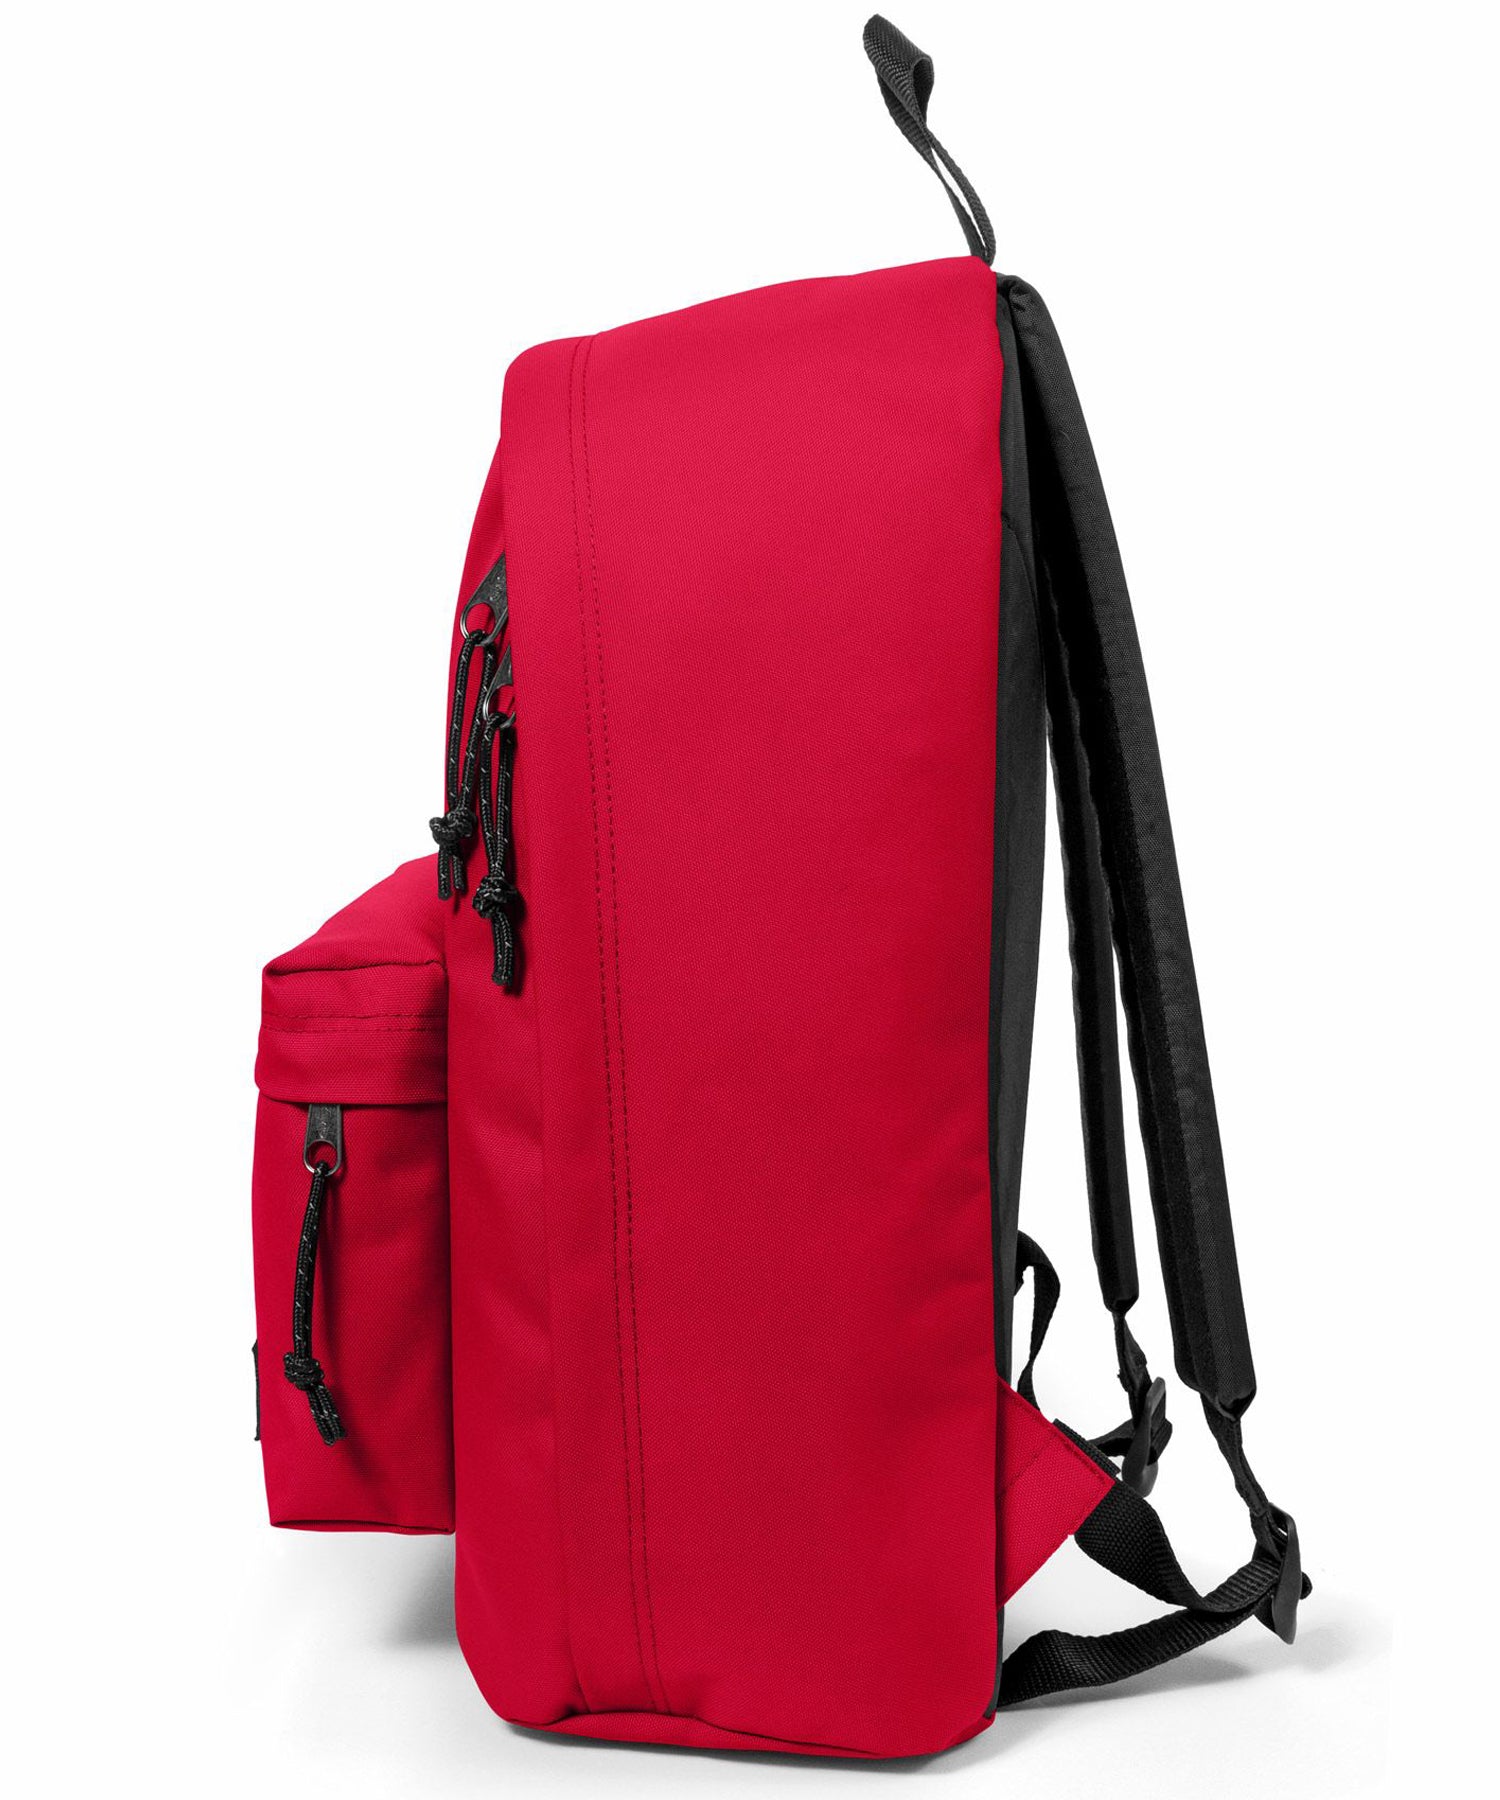 eastpak-mochila-out of office-color-rojo-pirata-denim-27 litros capacidad-alojamiento para portátil-bolsillo exterior con cremallera.